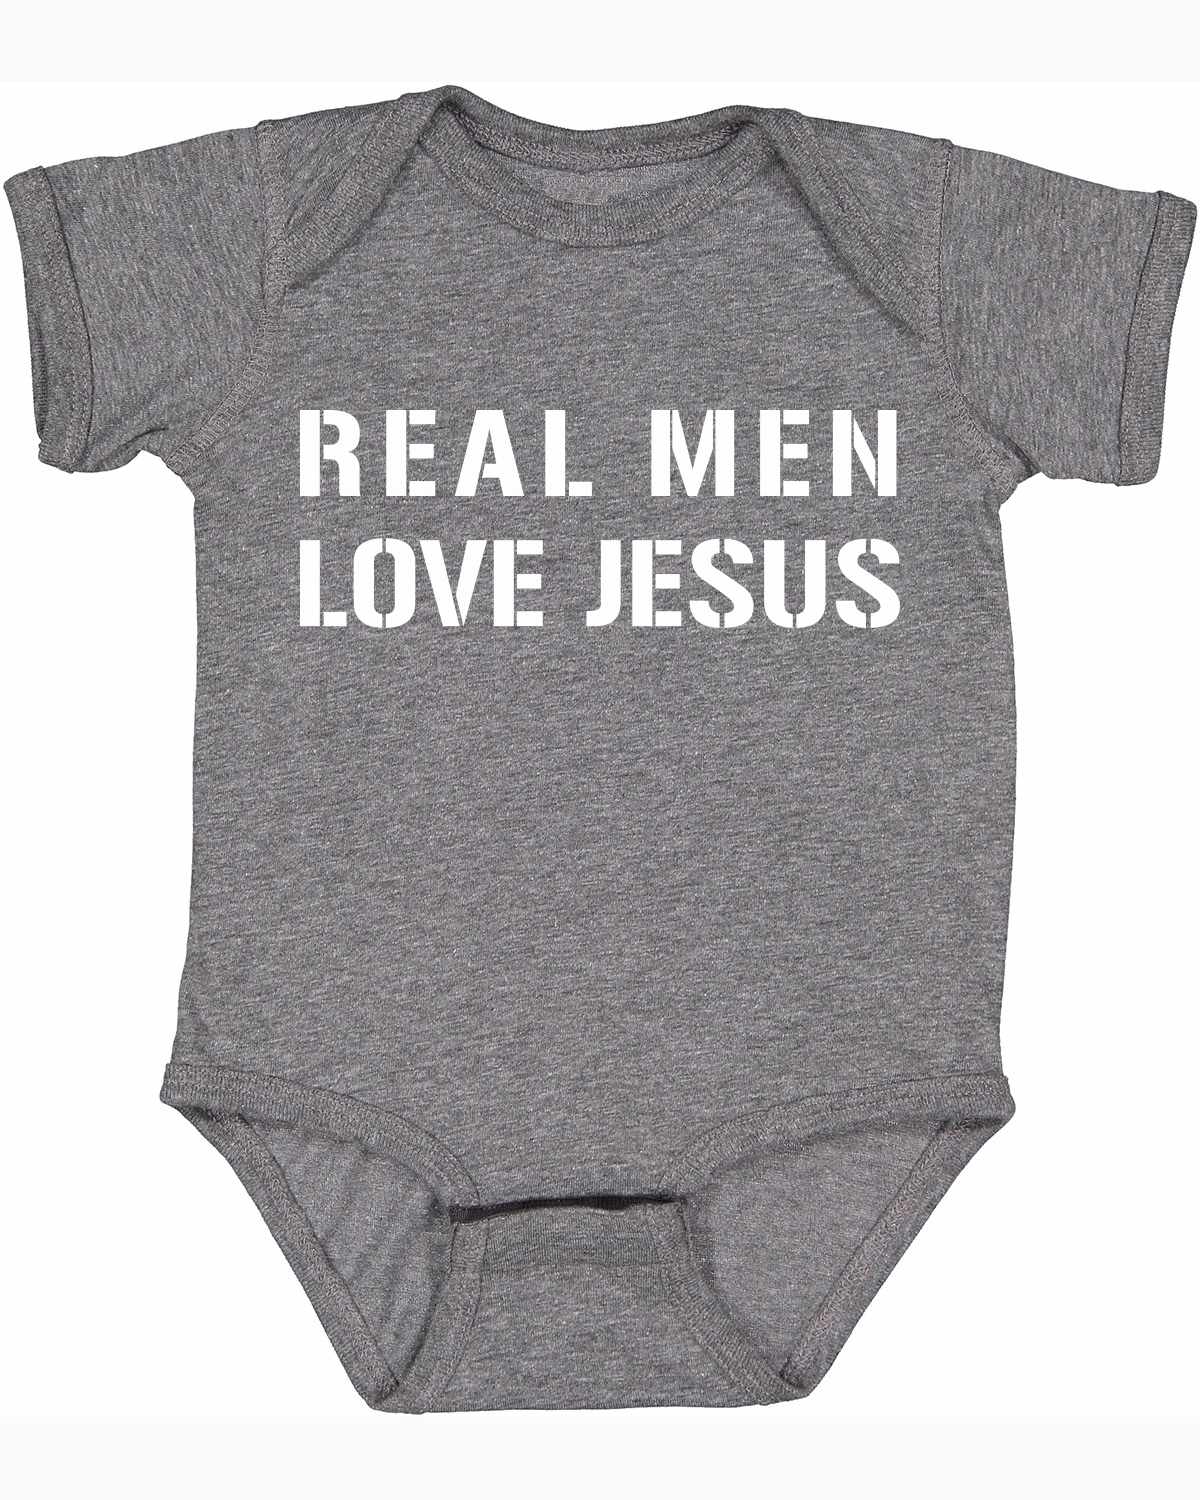 REAL MEN LOVE JESUS on Infant BodySuit